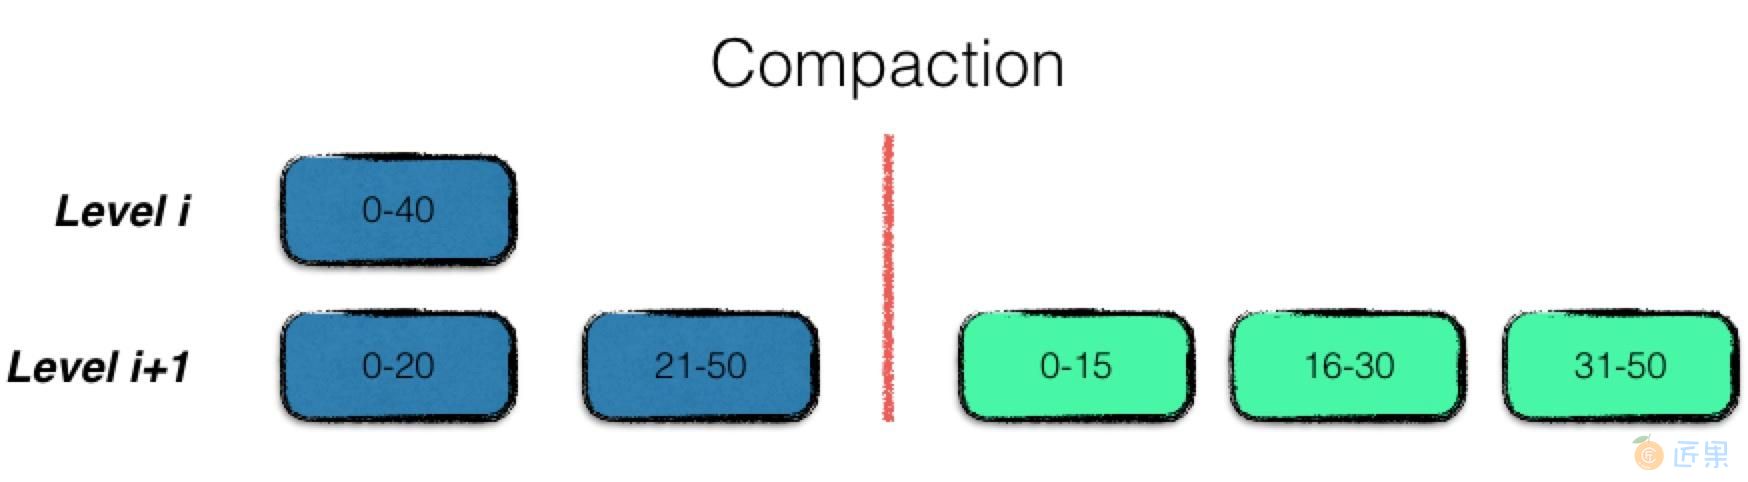 Compaction过程 - 图4